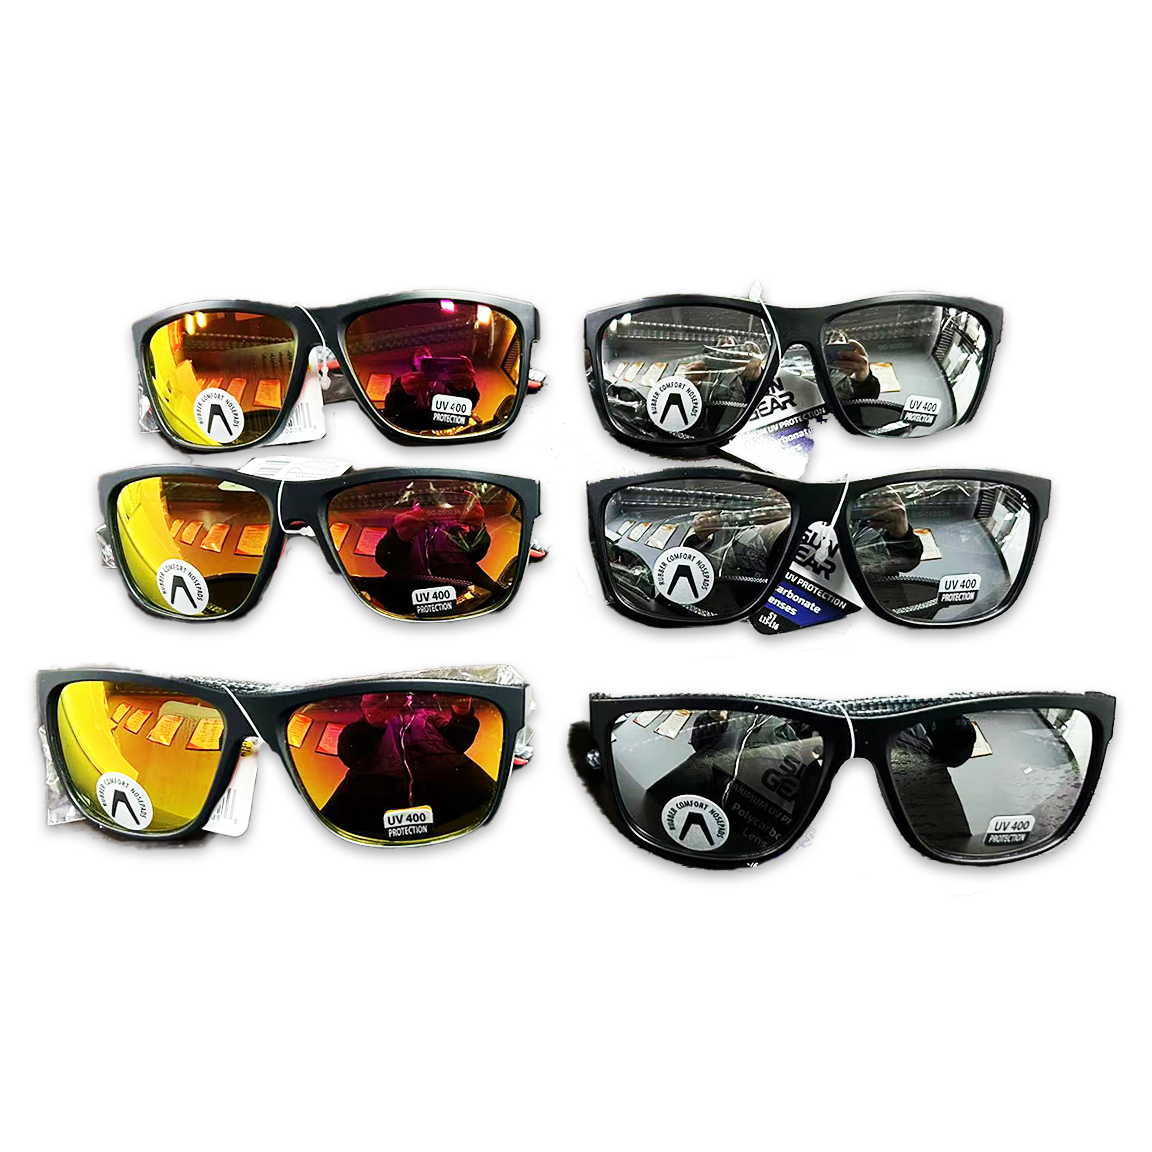 Sunglasses SunGear Assortment- 6 Pieces Per Pack 50238